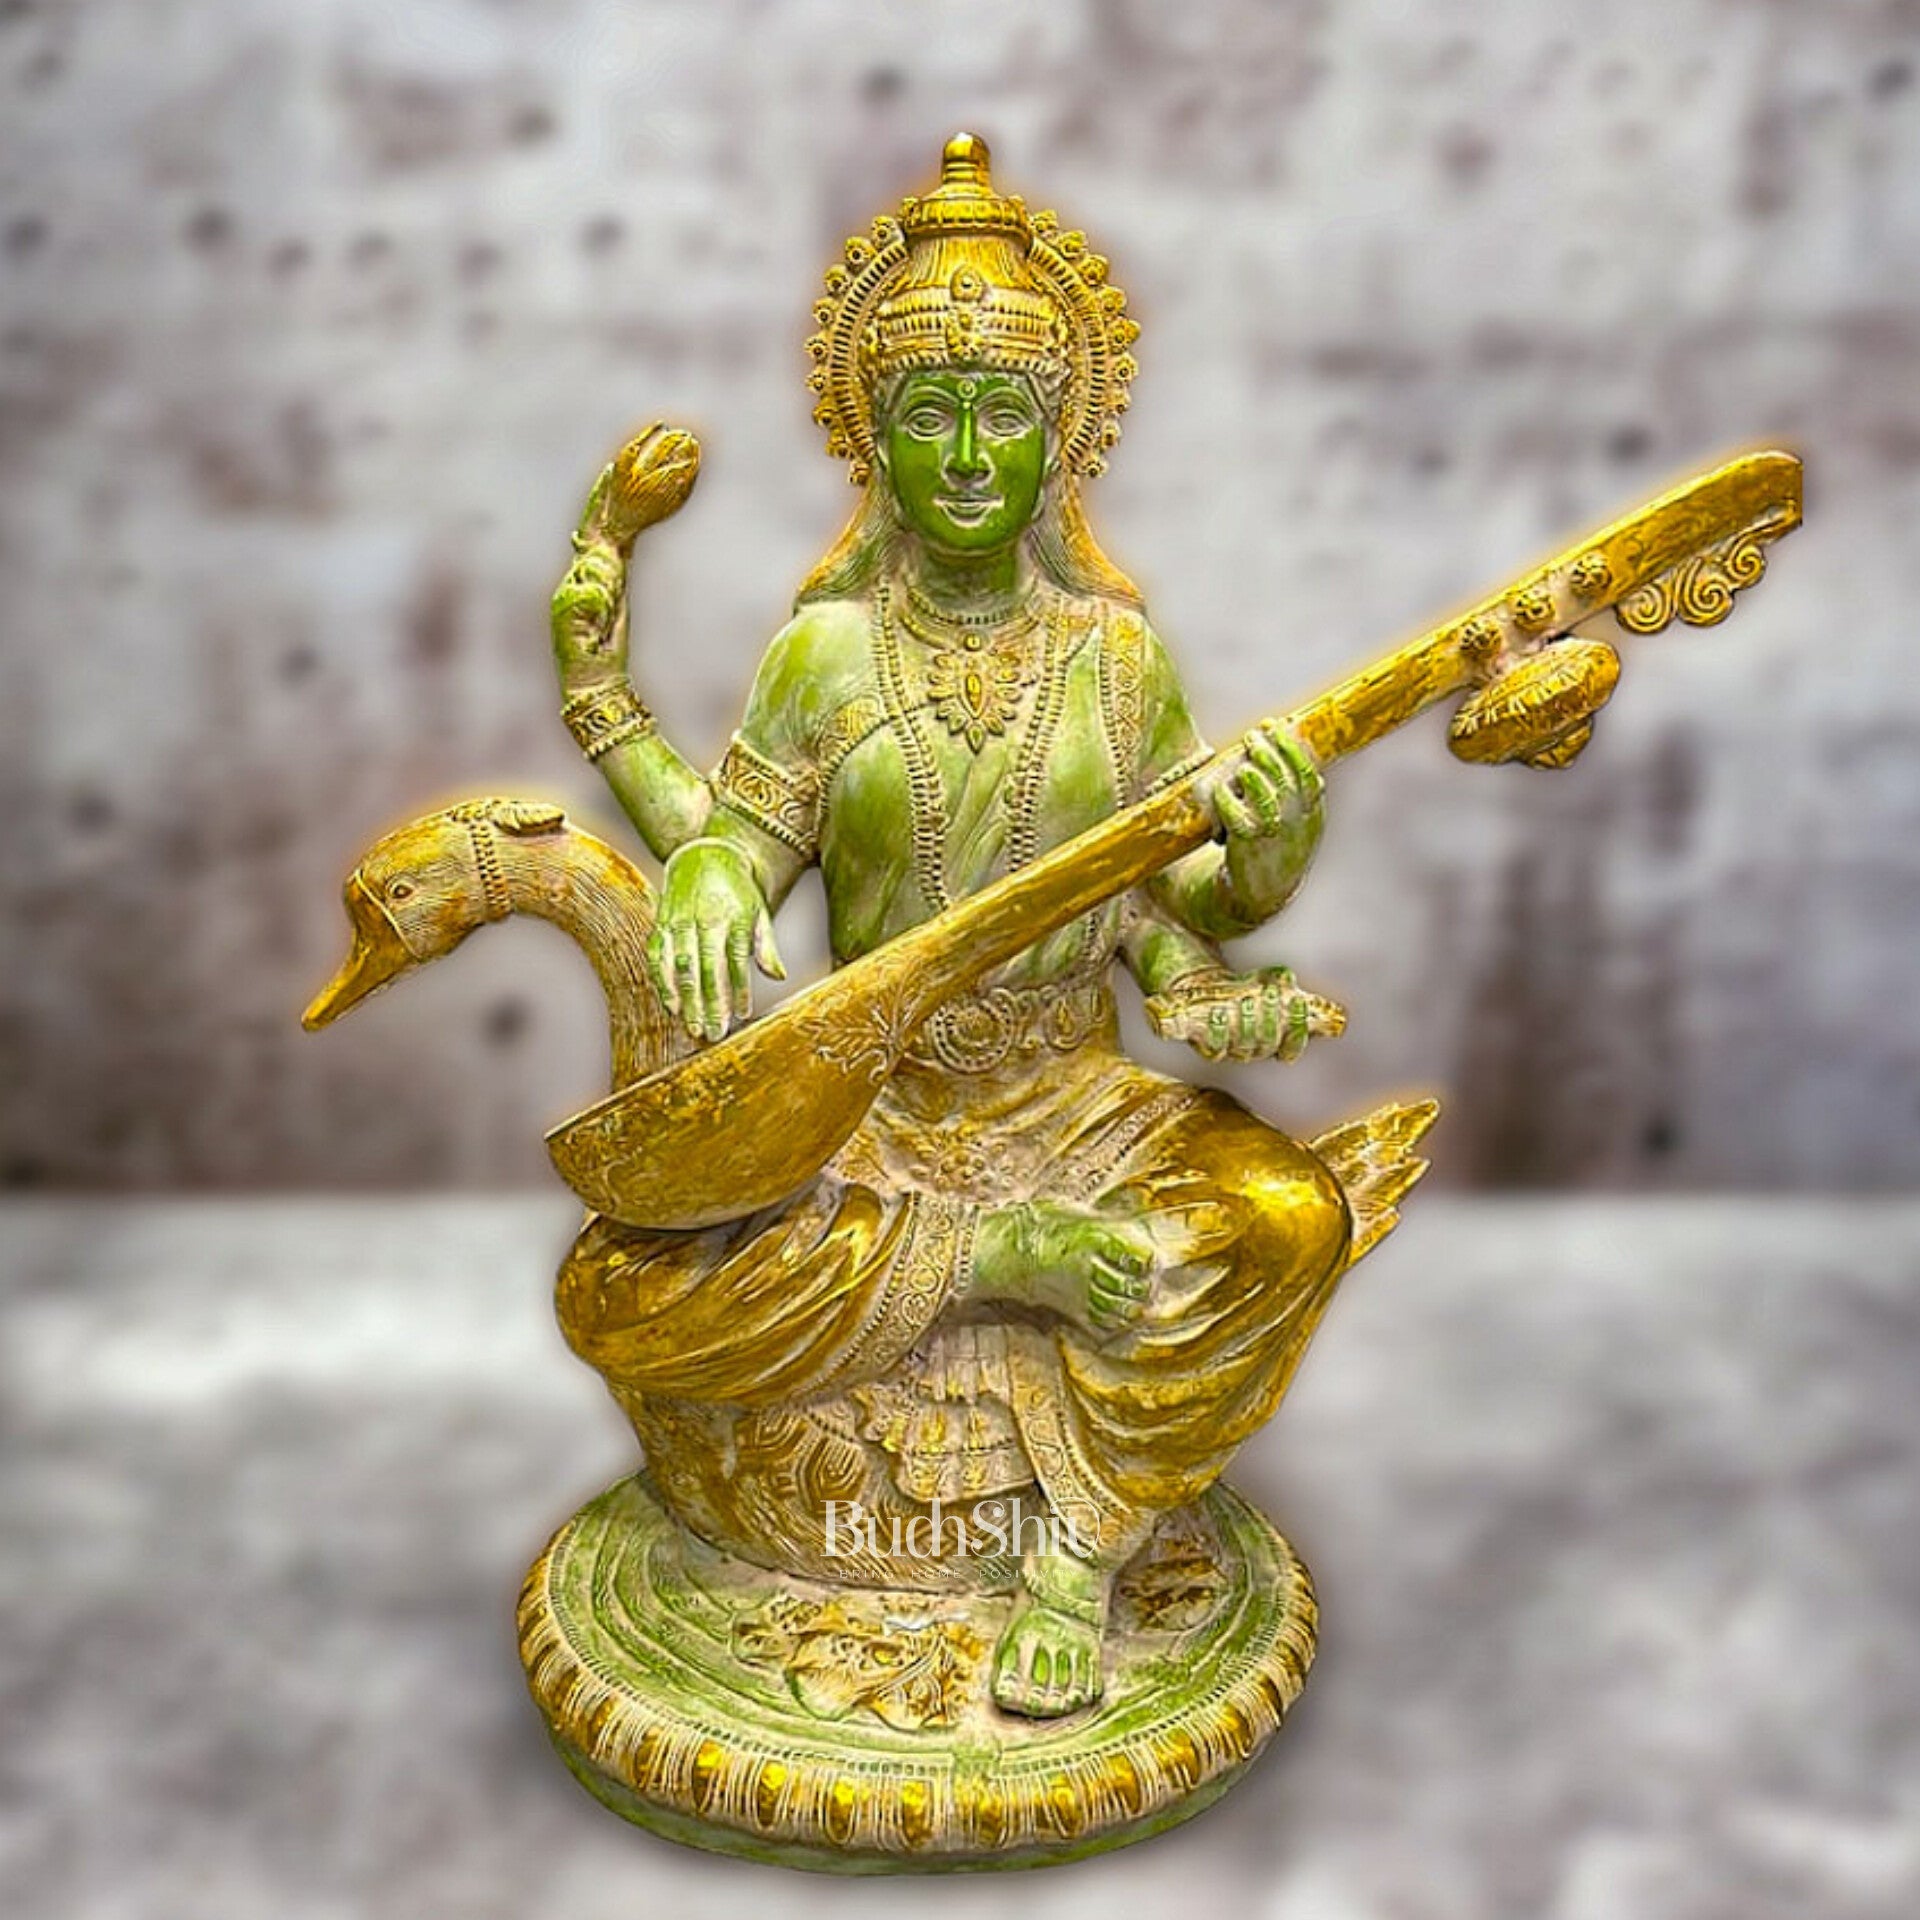 Antique Brass Superfine Goddess Saraswati Statue - 24" - Budhshiv.com